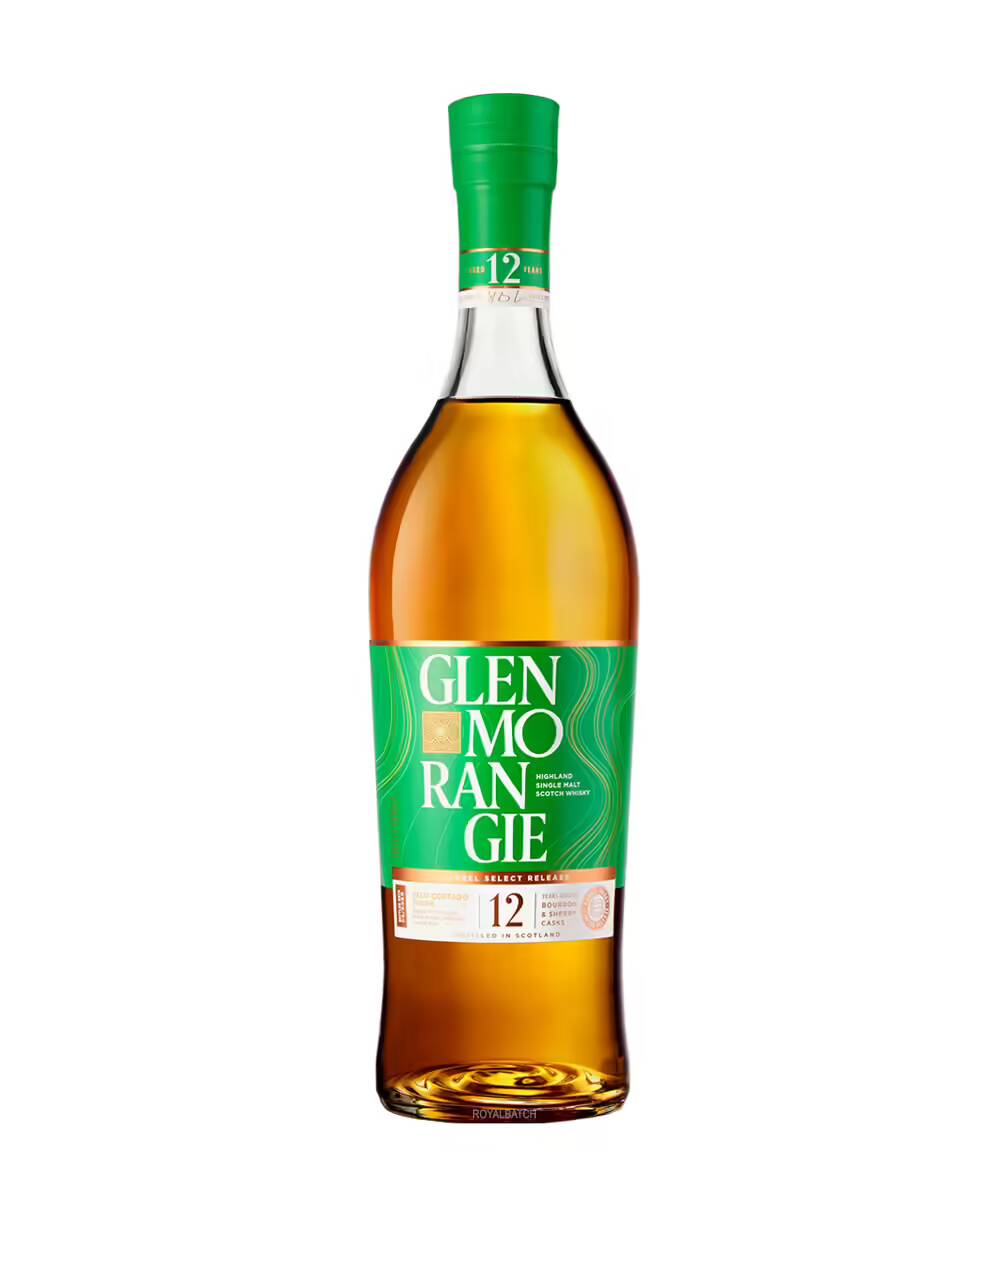 Glenmorangie Barrel Select Release Palo Cortado Finish 12 Year Old Scotch Whisky